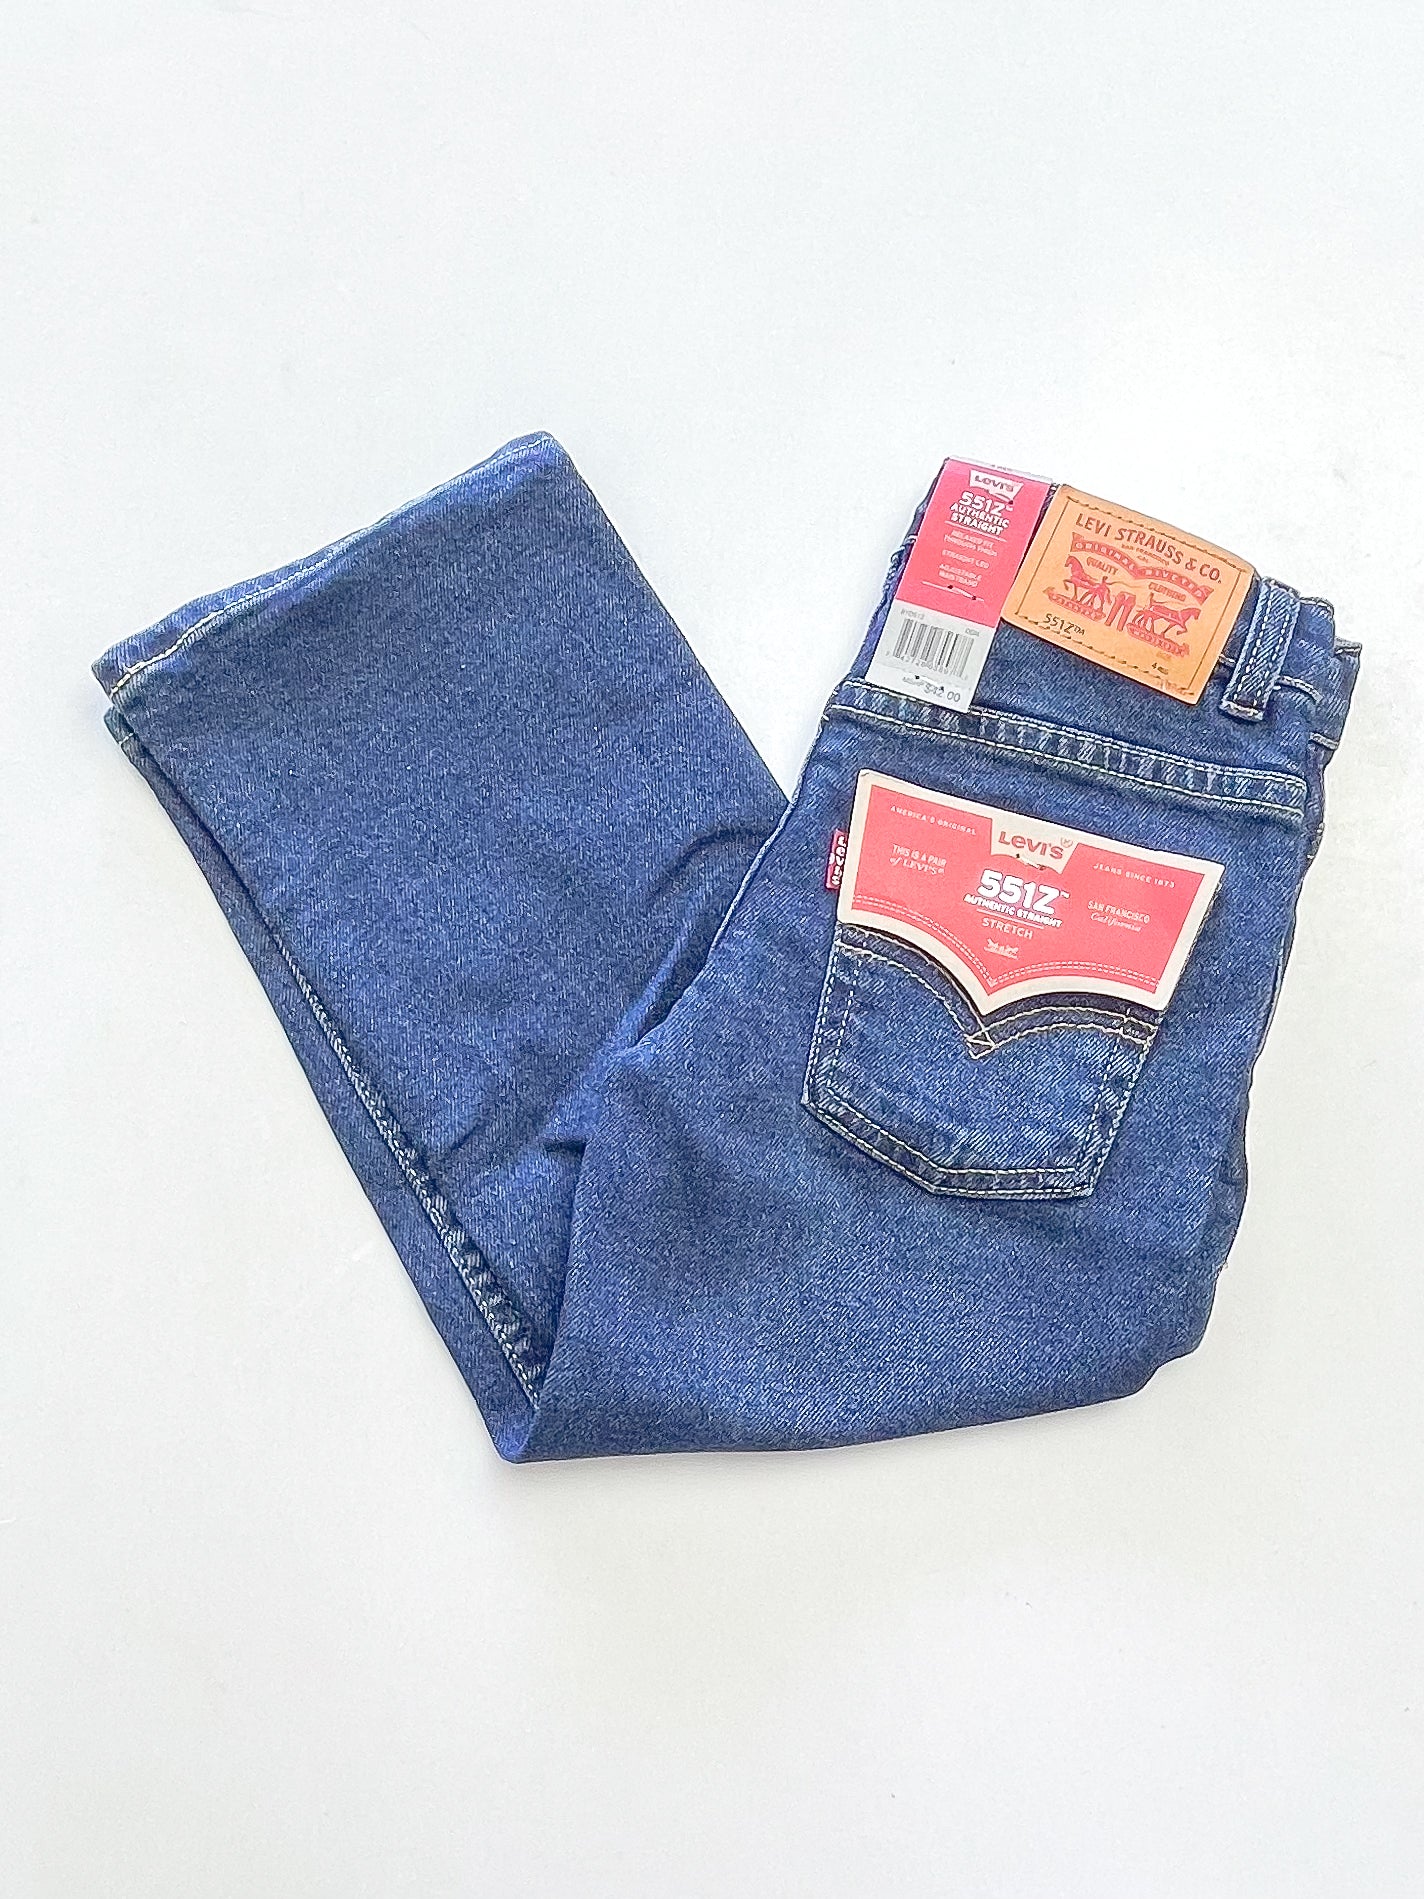 BNWT Levi's 551Z relaxed denim jeans (4y)